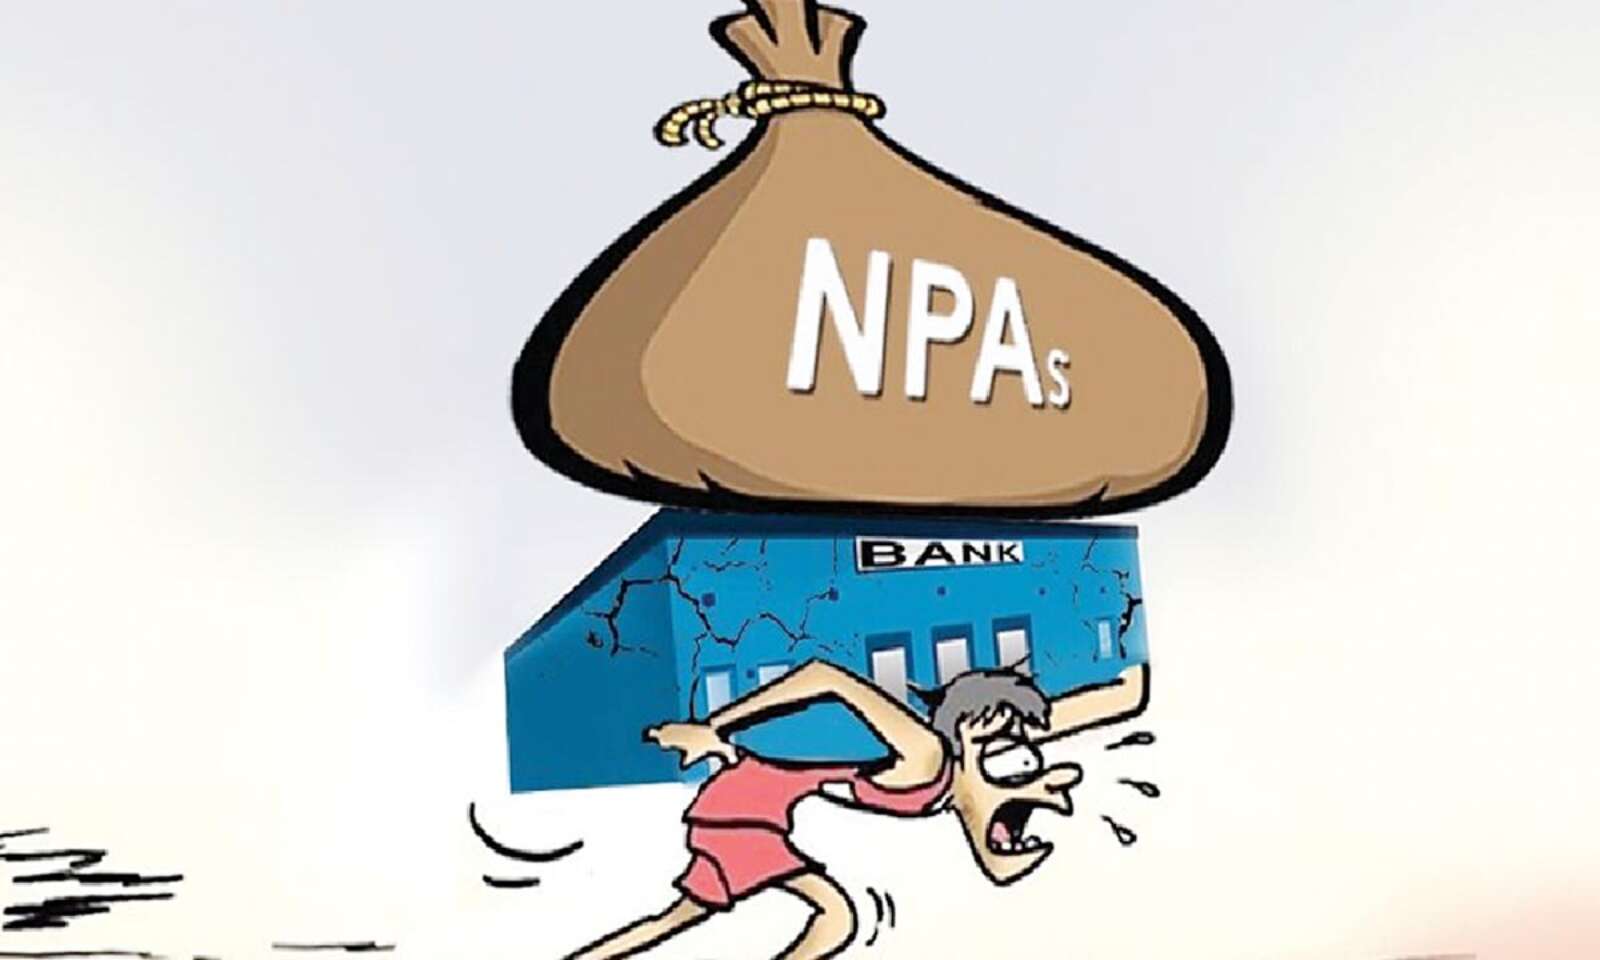 Bank NPA story of twist and turn